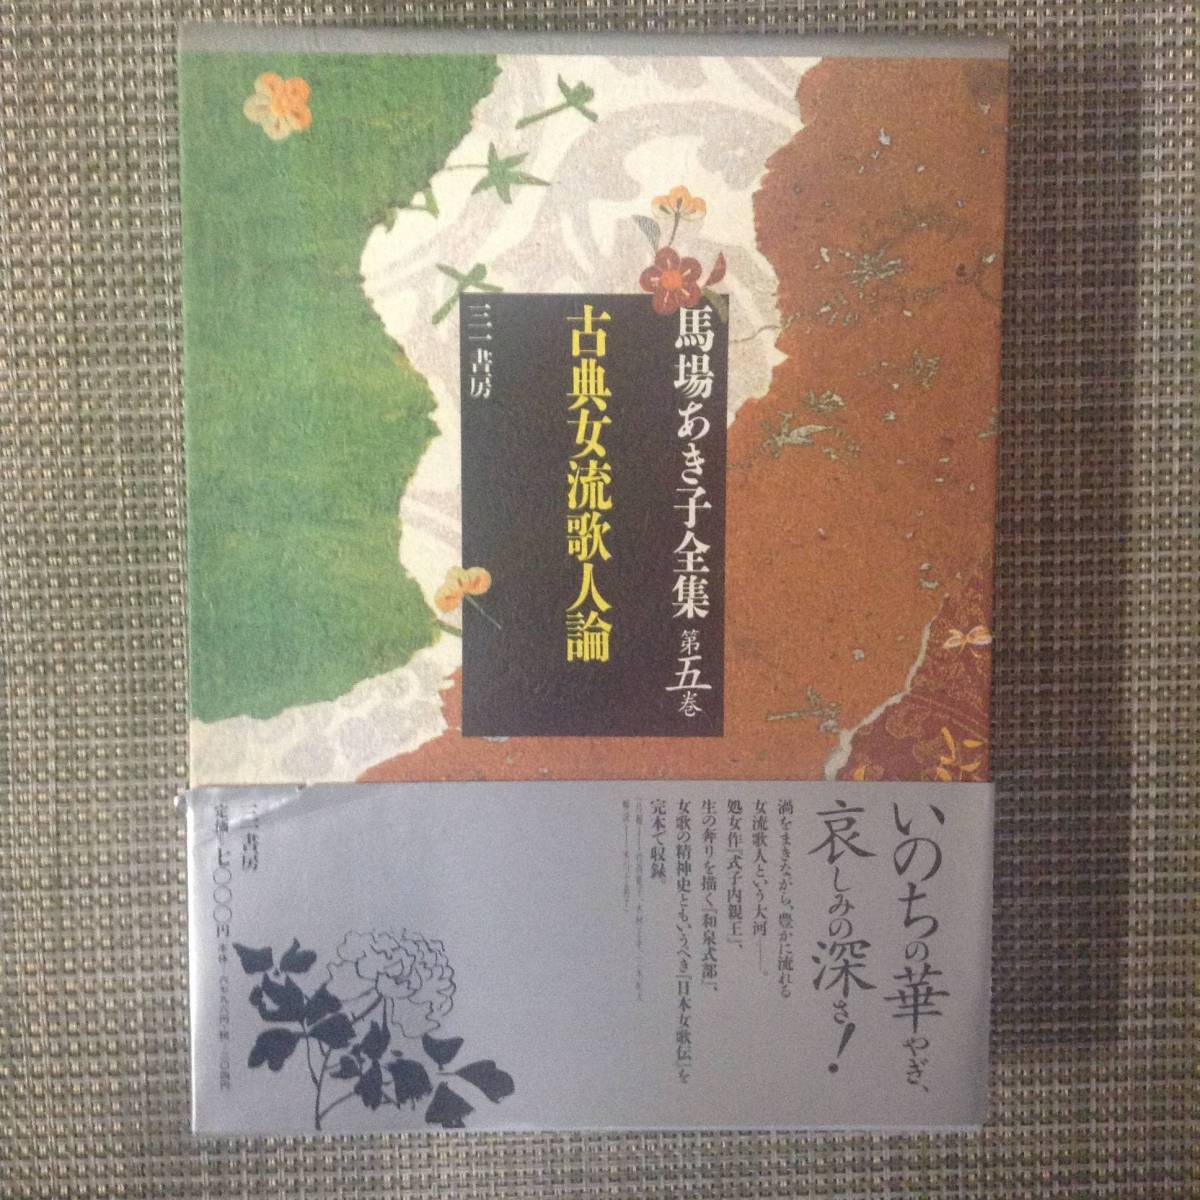 Akiko Baba, Volume 5 Volume 5 Classical Female Land of Unligurated Author: Akiko Baba issued by Aikiko Baba: Sanichi Shobuki Issuance Date: April 15, 1996 The 1st Edition 1st Print